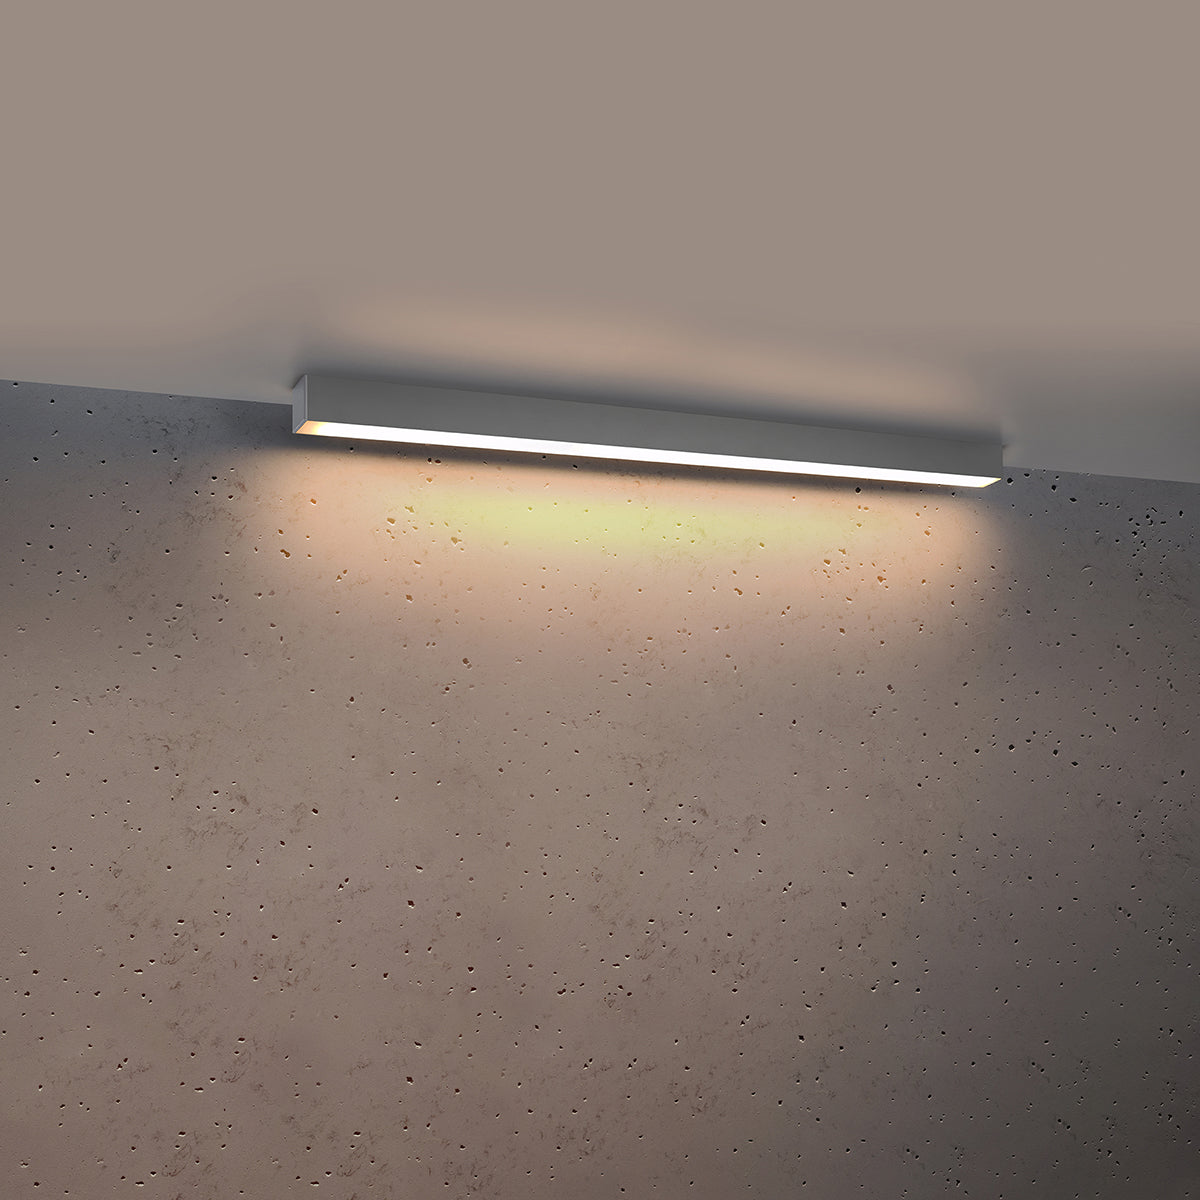 plafondlamp-pinne-90-grijs